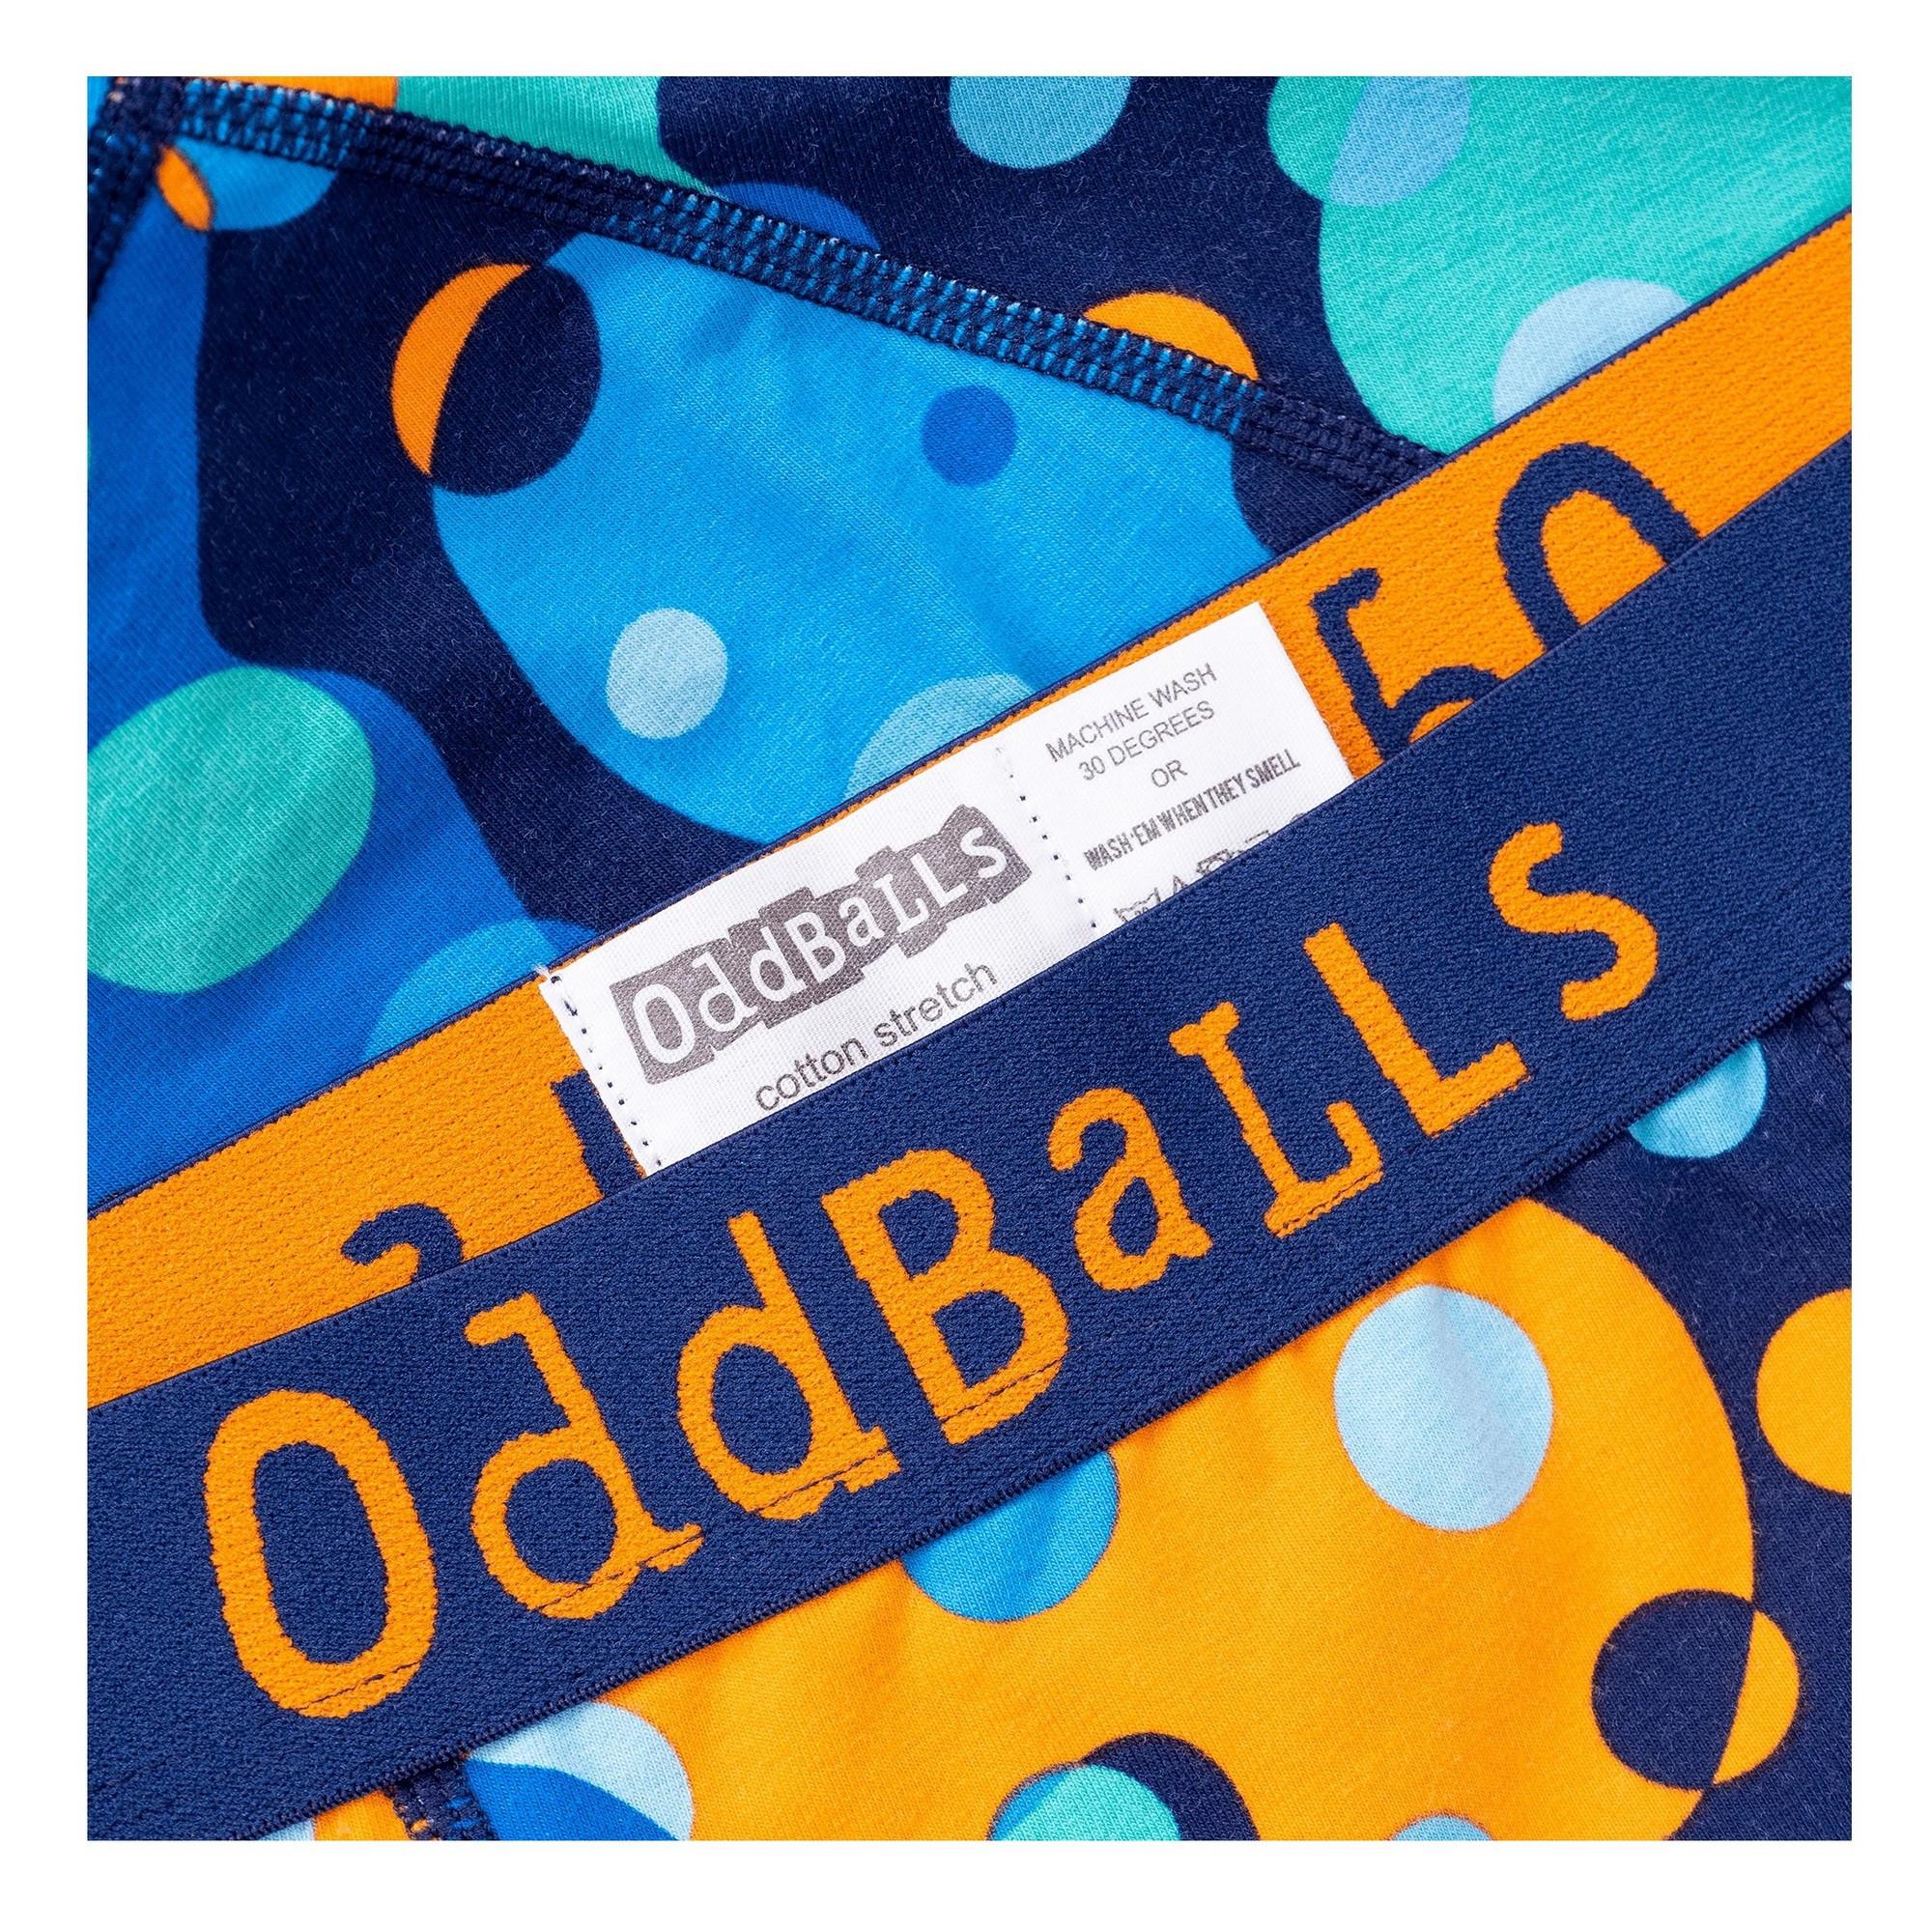 OddBalls  Space Balls Slips 